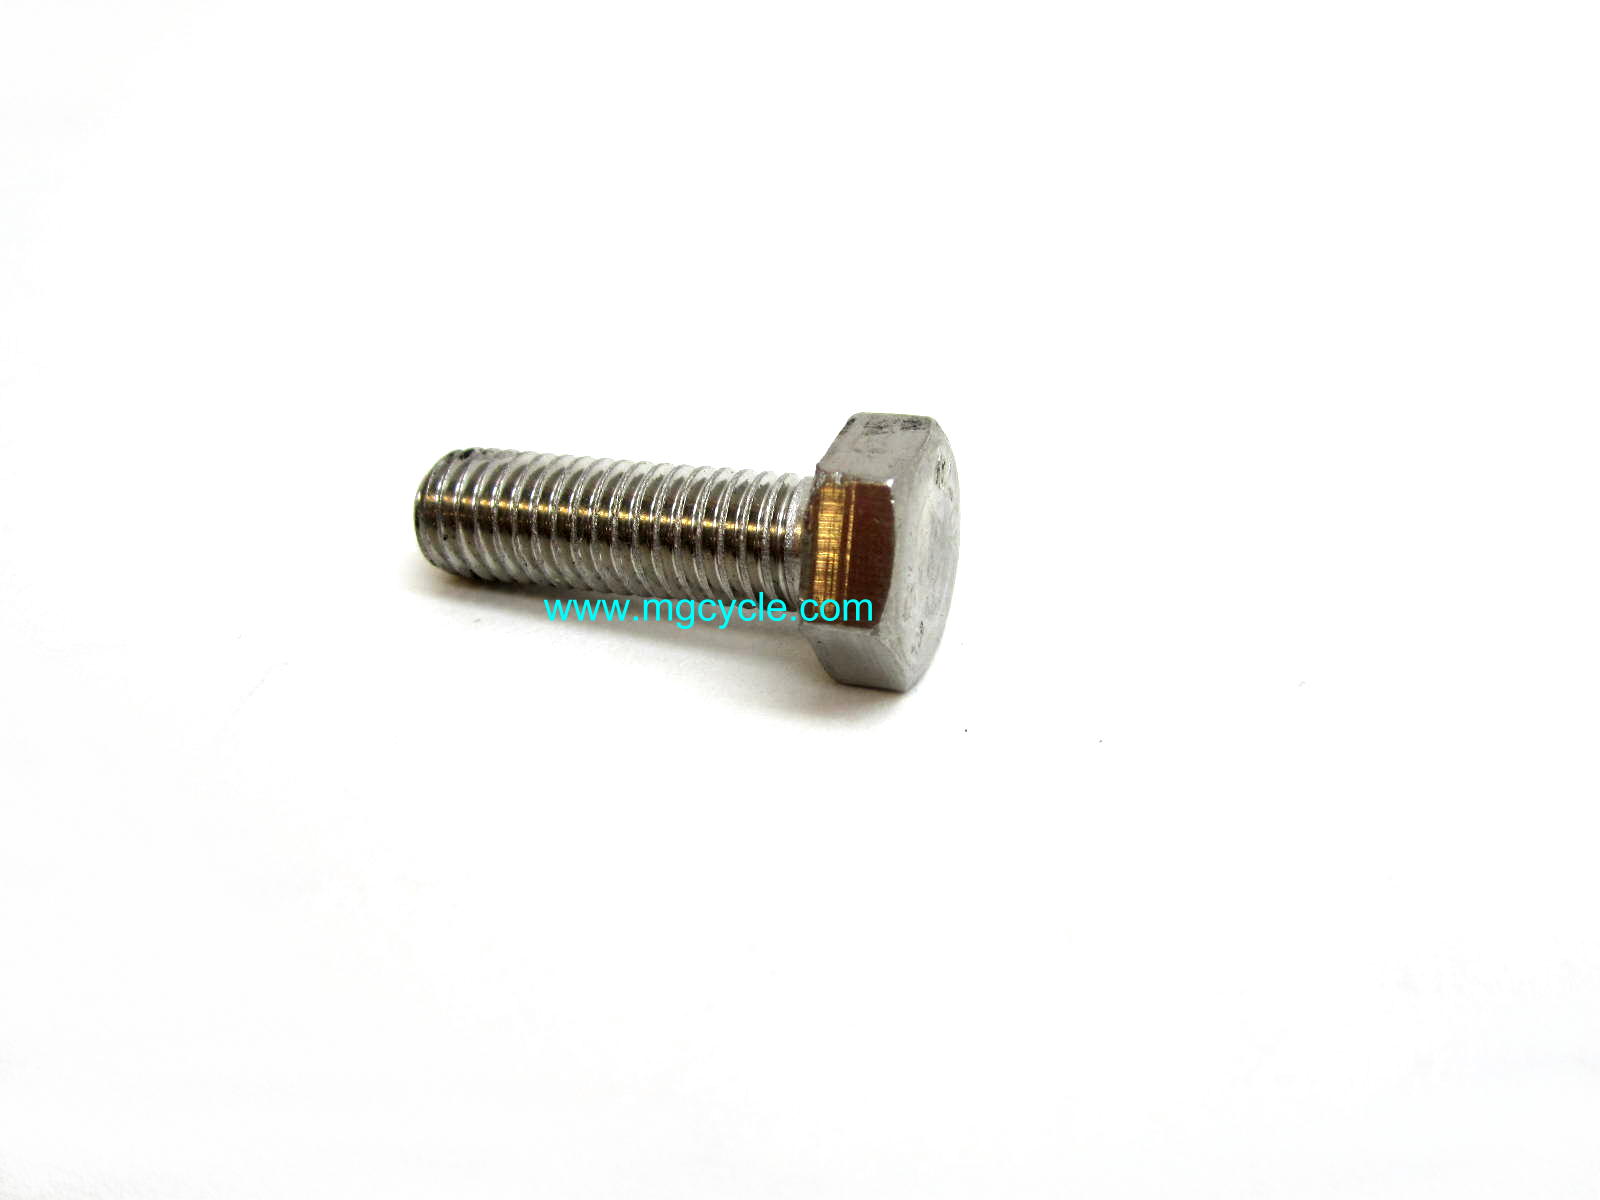 8mm stainless steel hex bolt, 25mm long